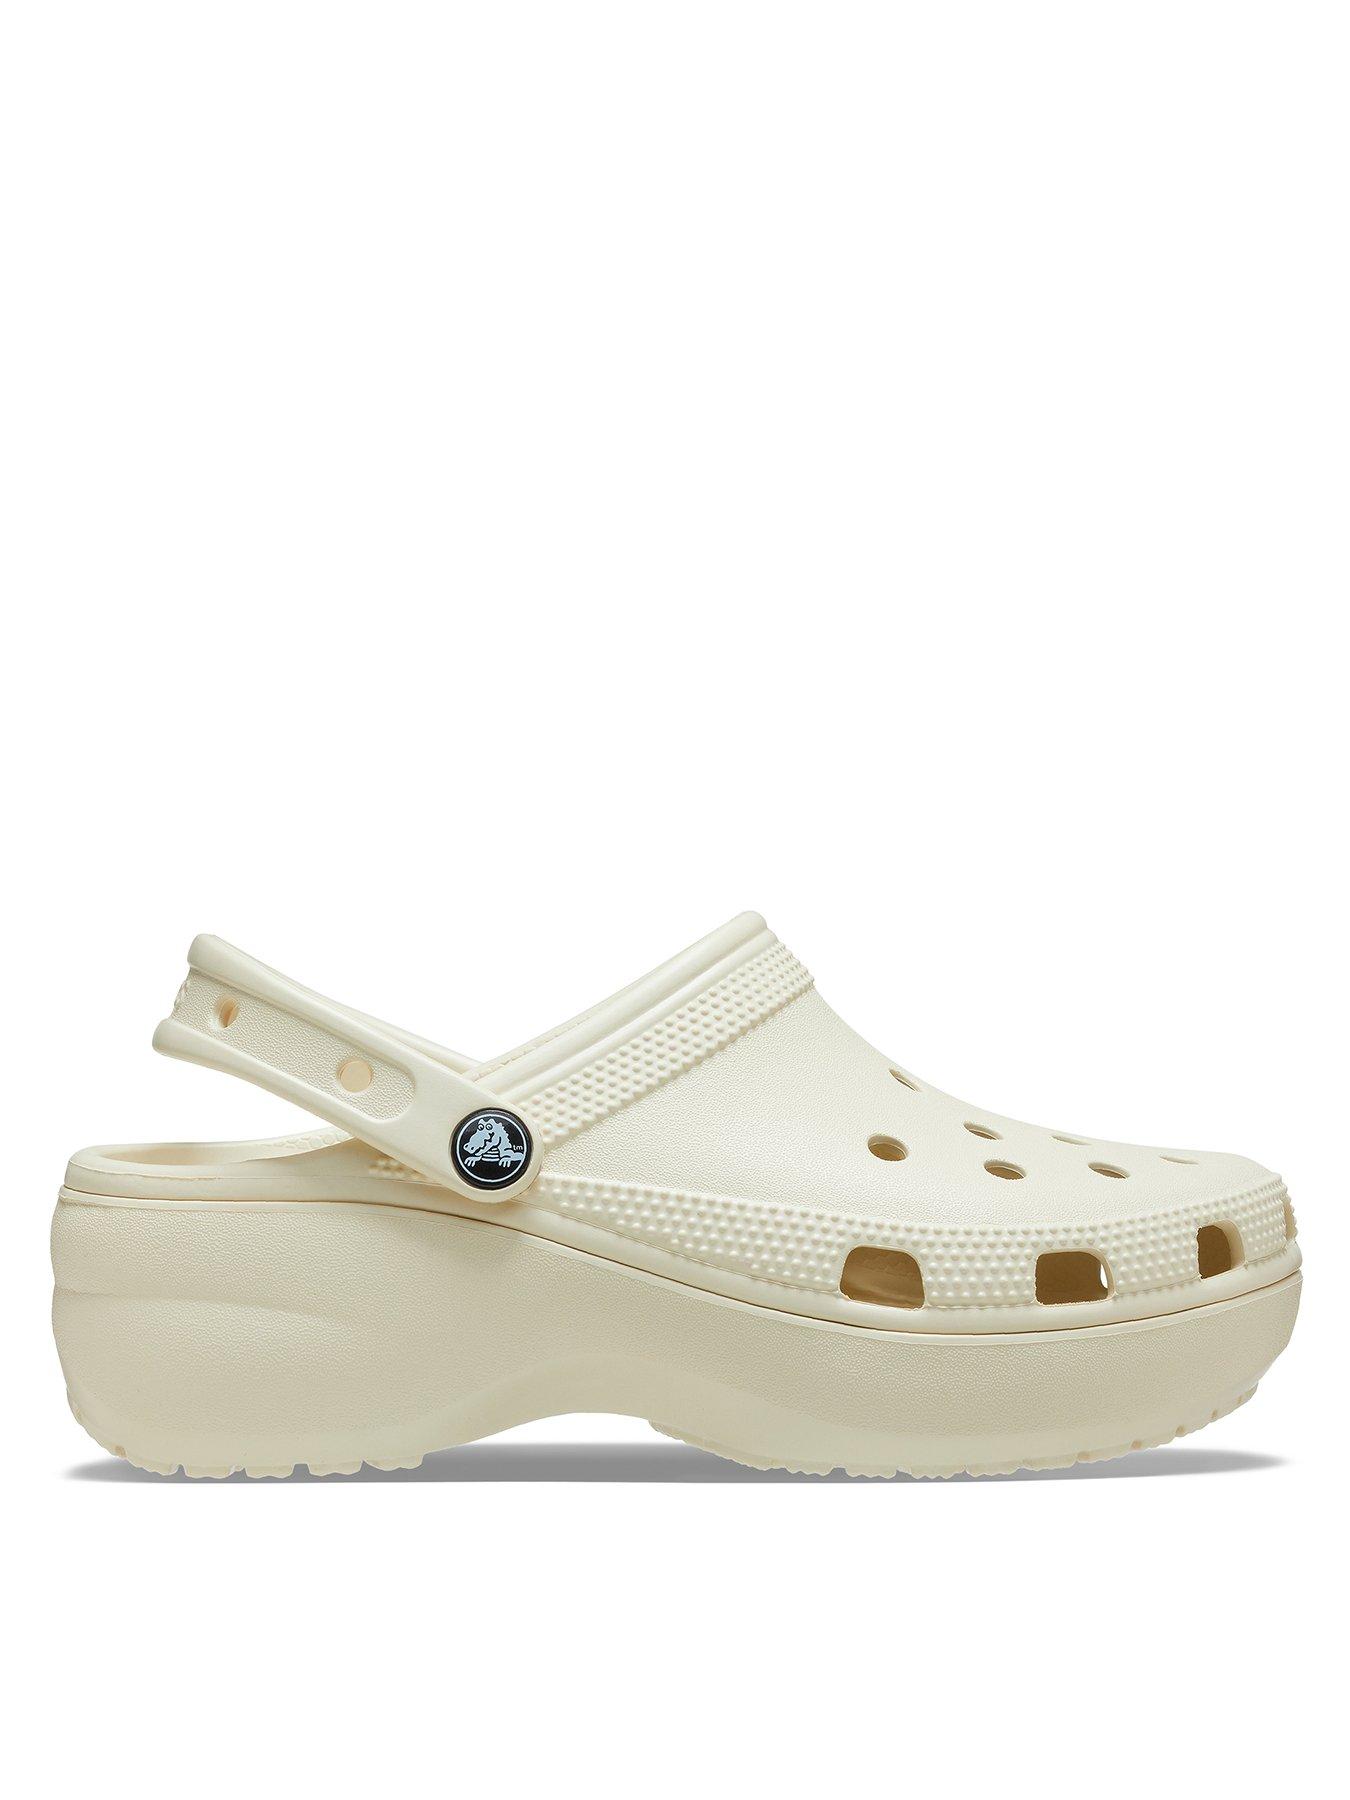 Buy Crocs Online | Platform Clogs | Crocs Shoes | Very Ireland